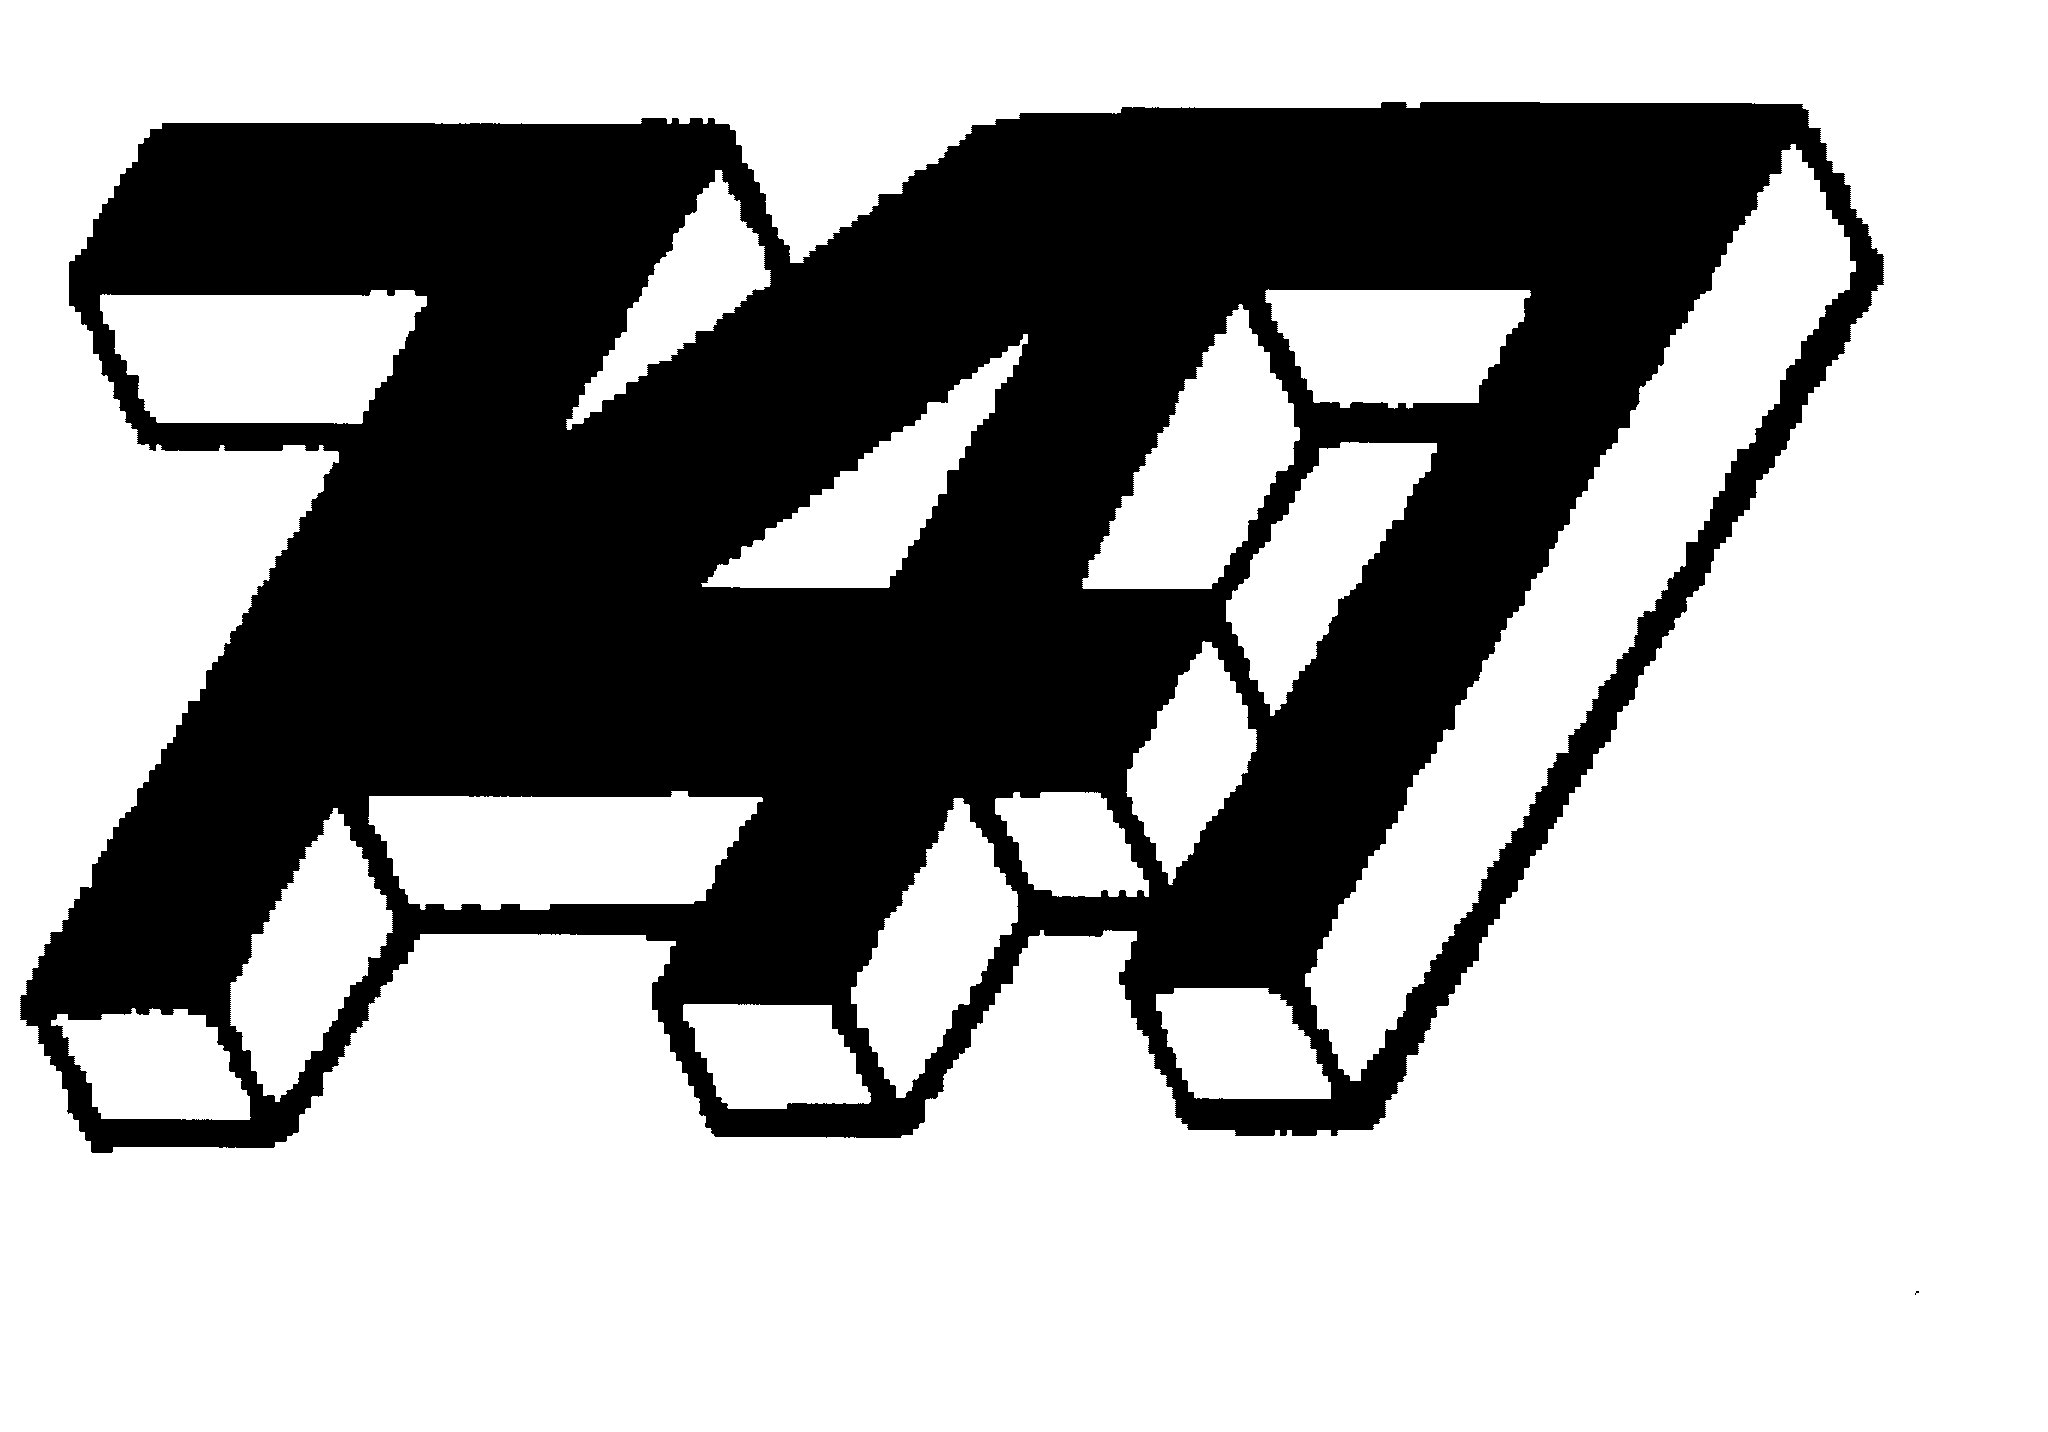 Trademark Logo 747